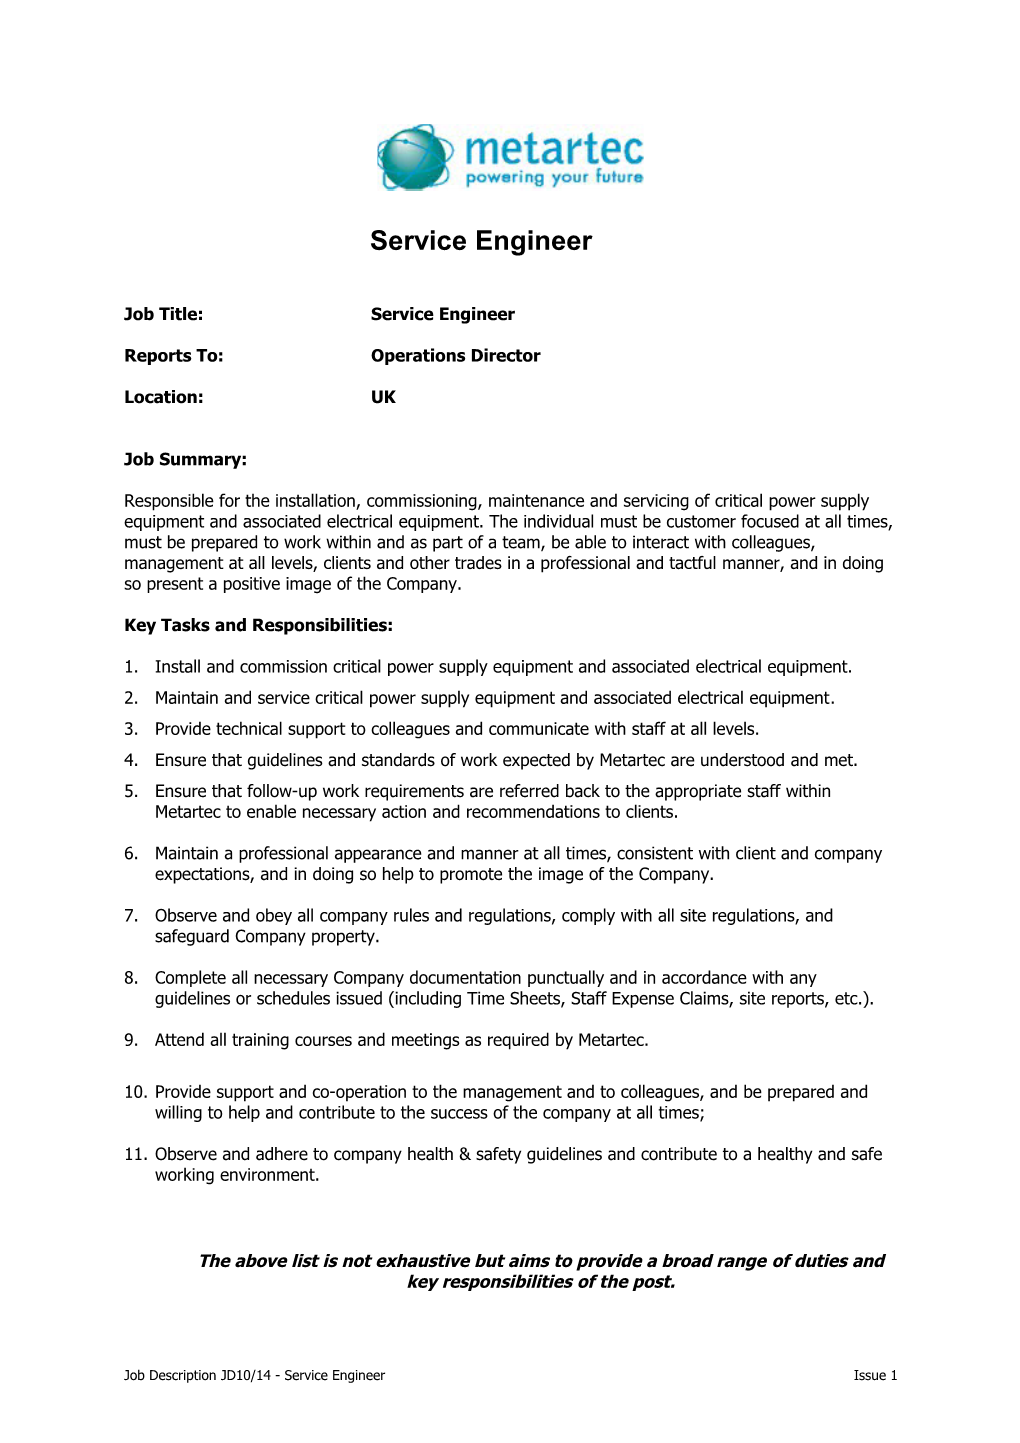 Job Title: Service Engineer